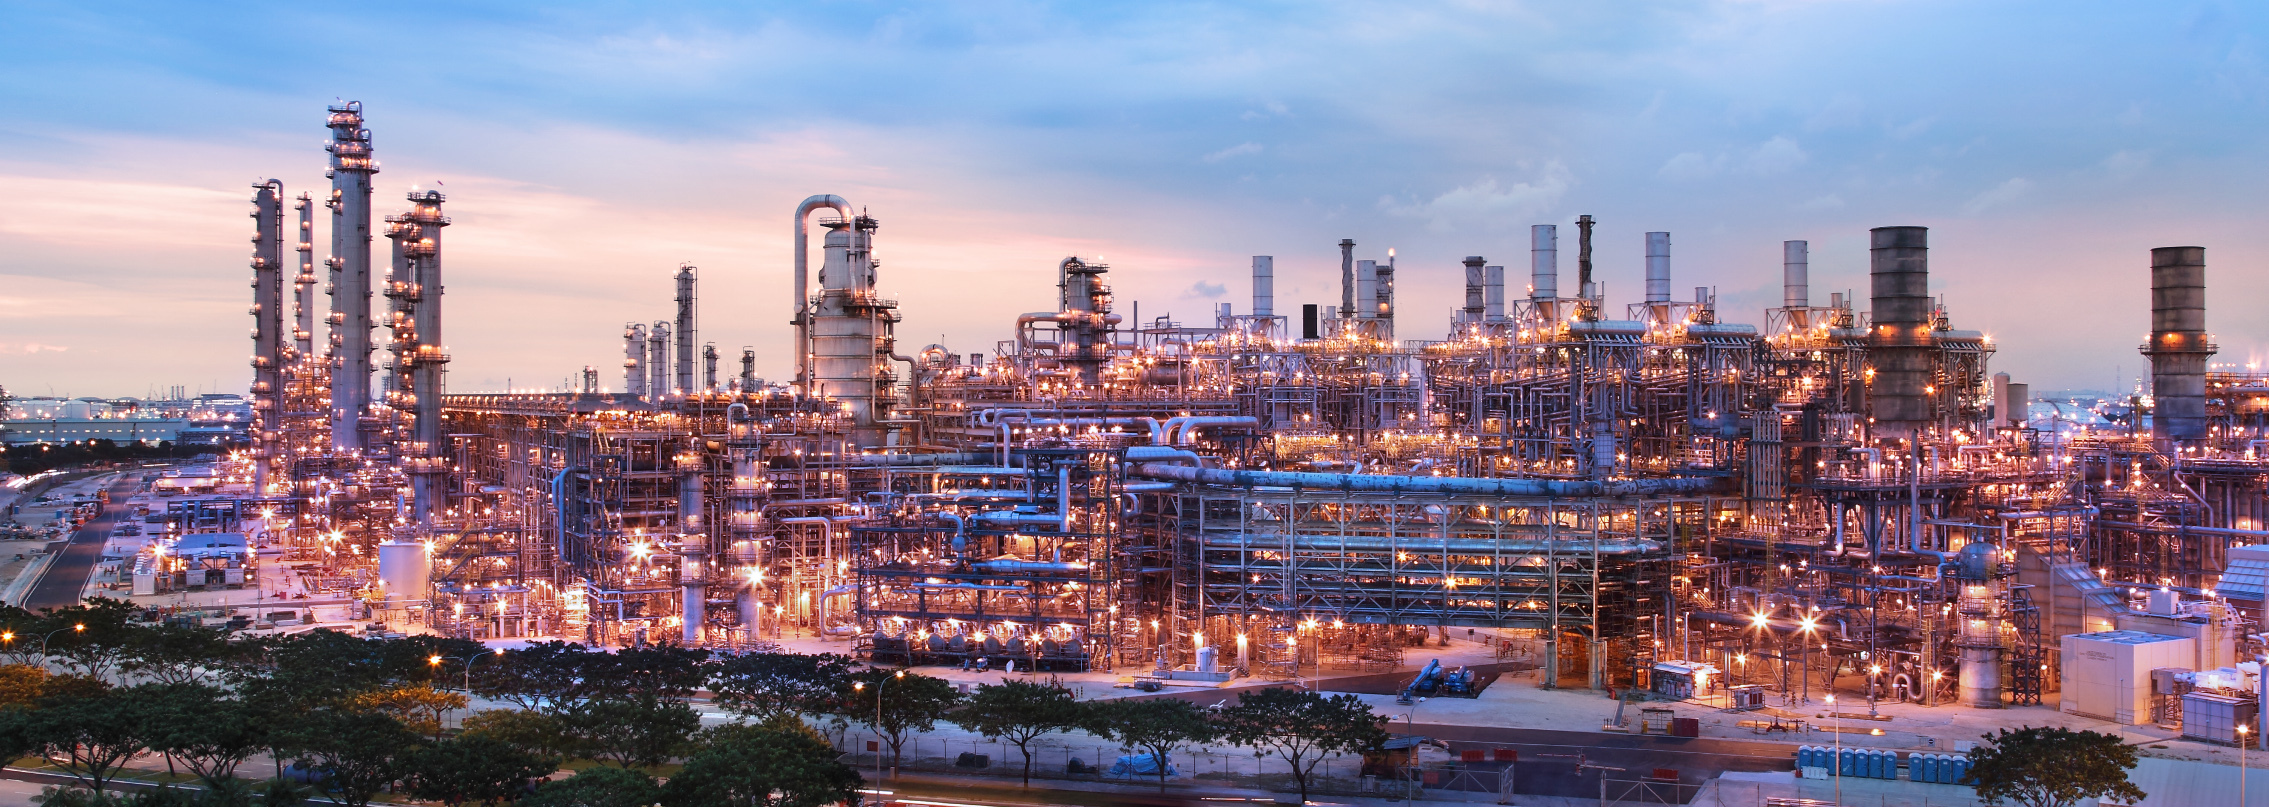 Singapore_Chemical_Plant_Expansion_photo.jpg